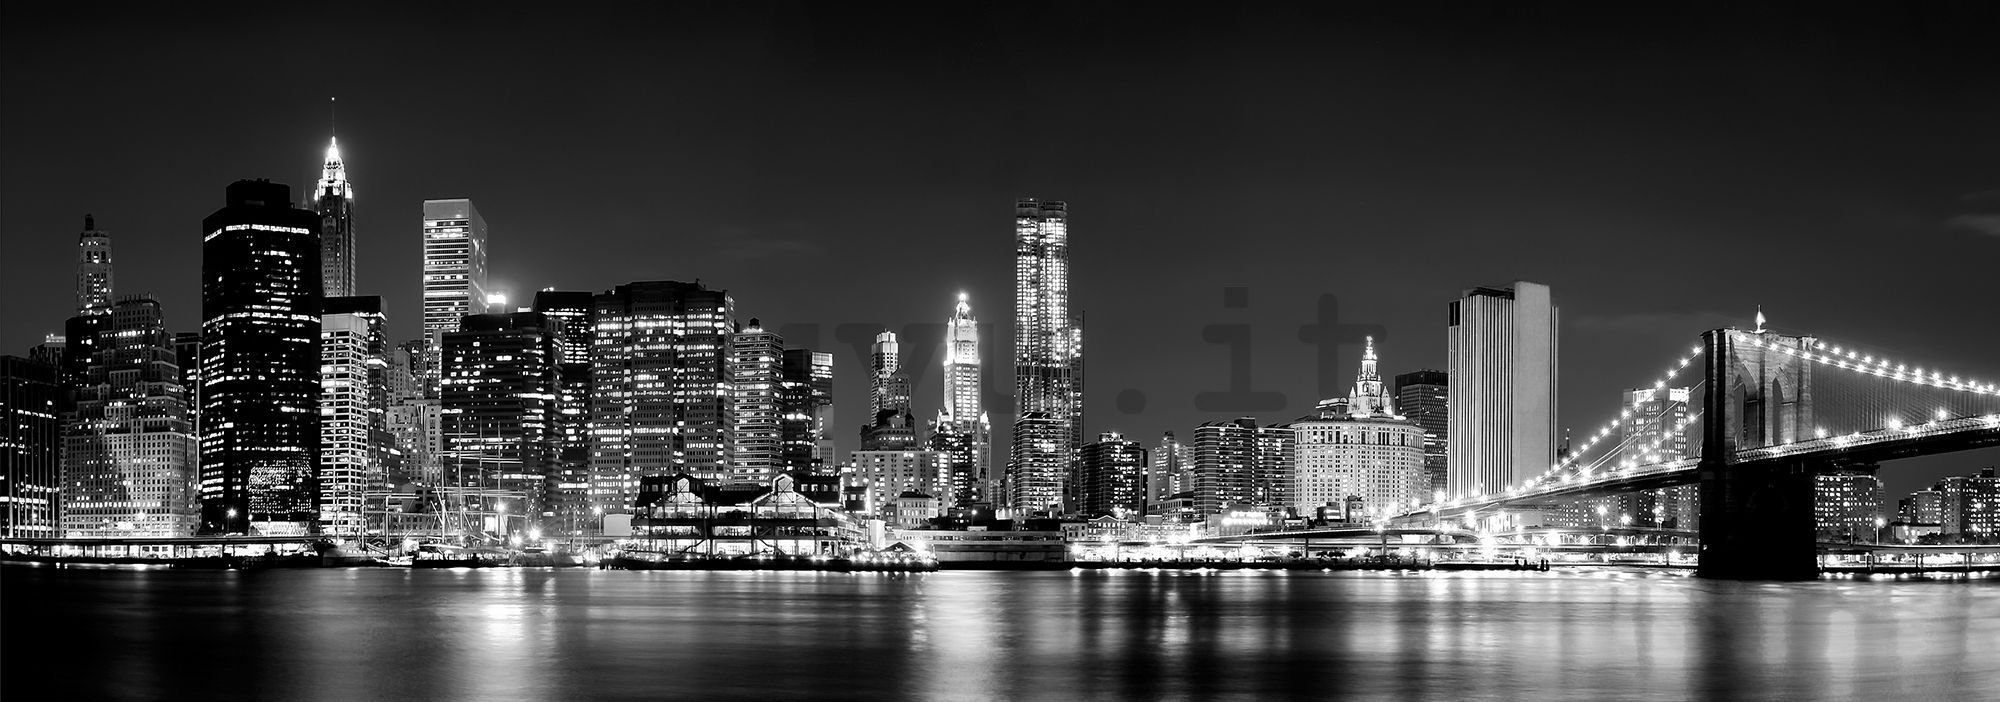 Fotomurale: N.Y. di notte (bianco e nero) - 624x219 cm